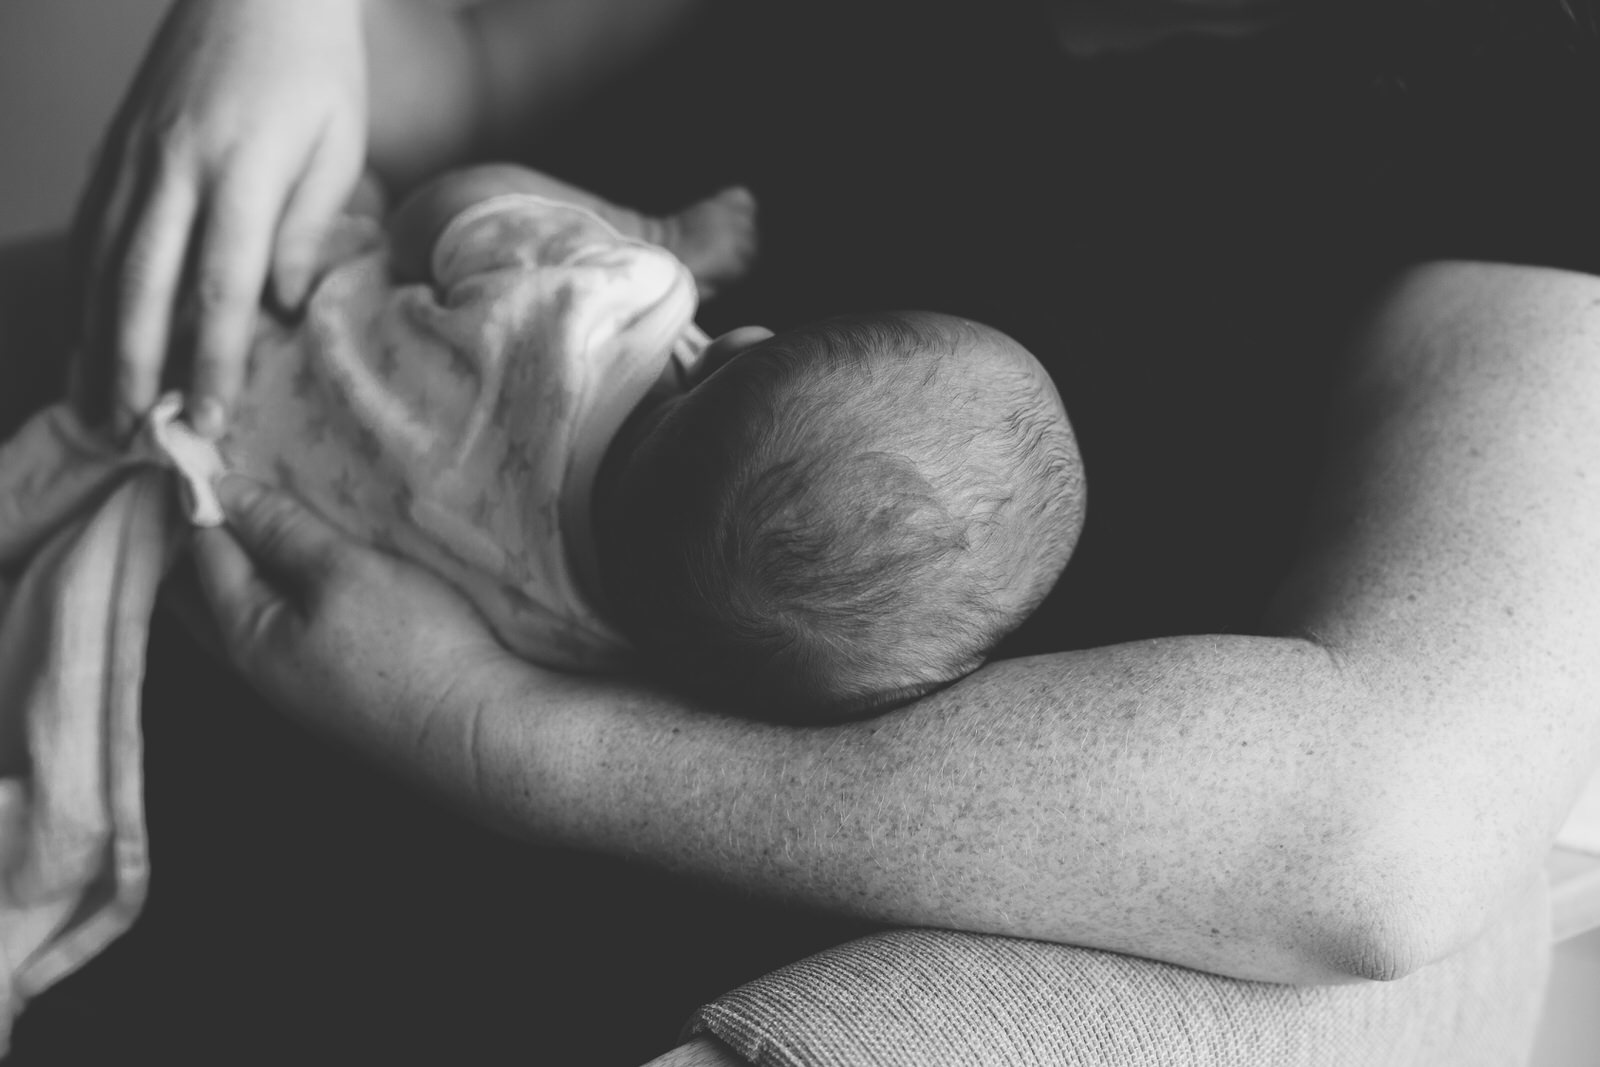  baby photographer aberdeen, breastfeeding photography, aberdeen newborn photographer 